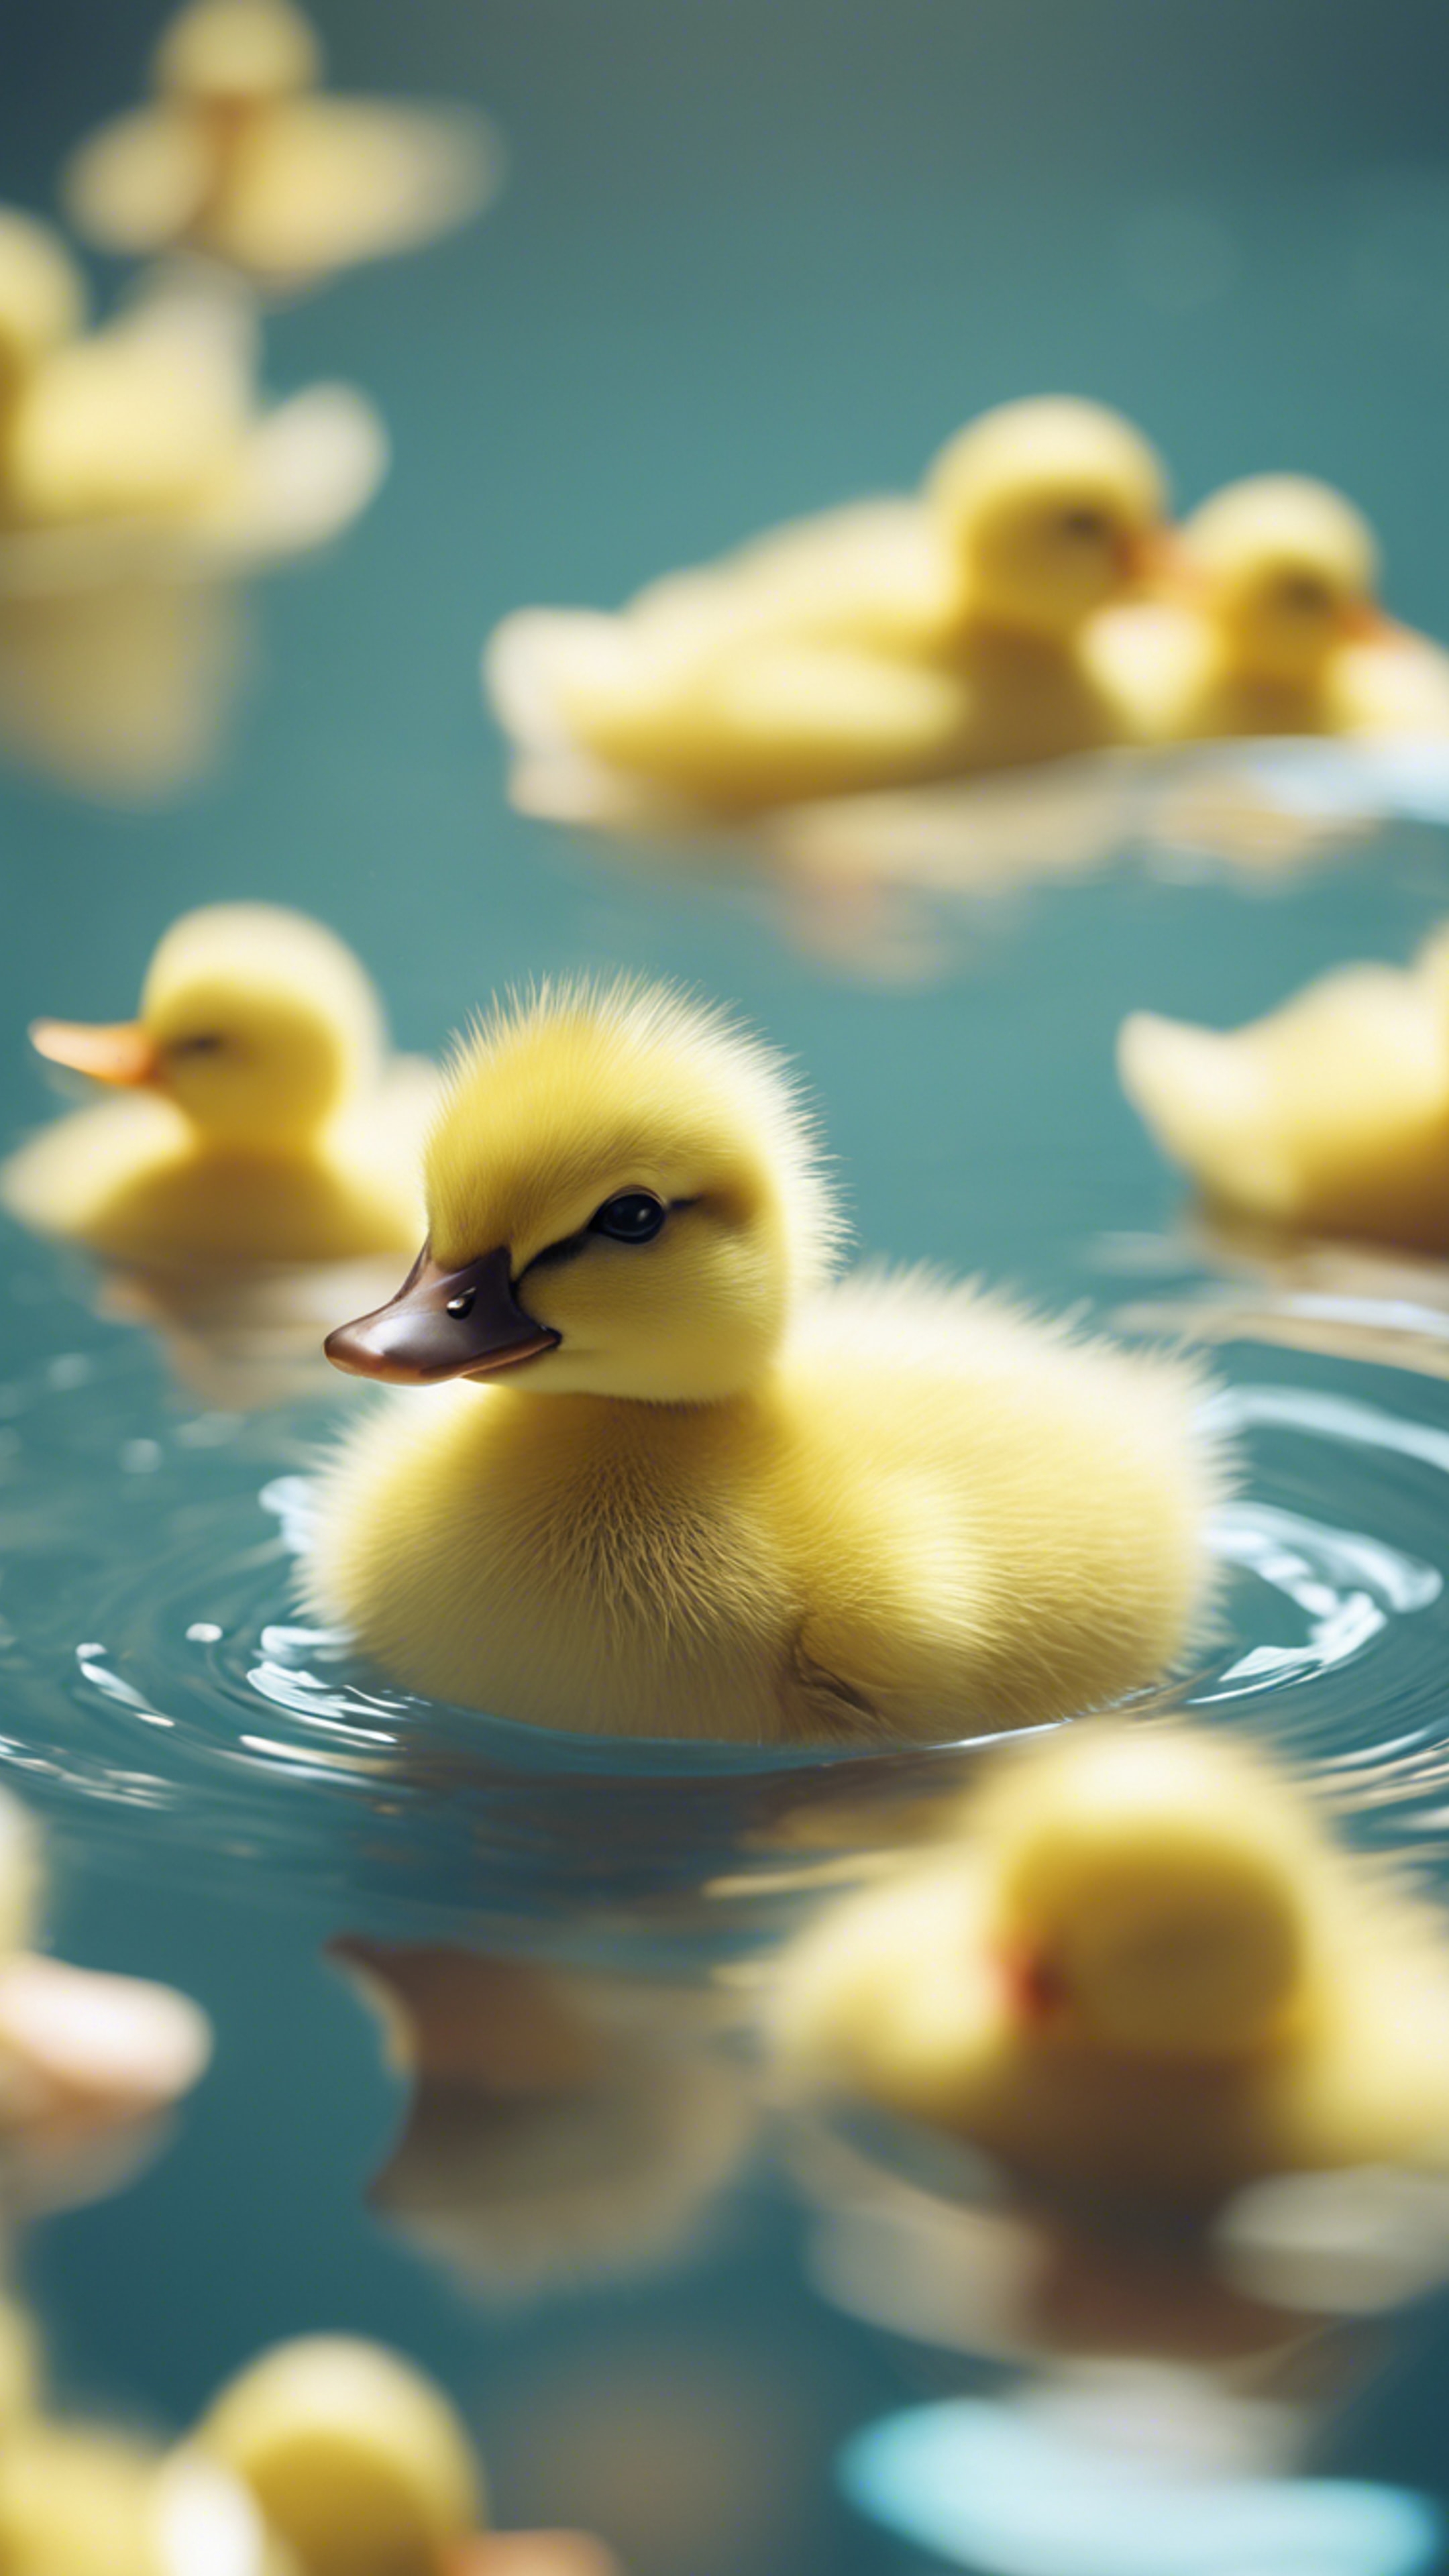 A small, chubby, kawaii yellow duckling swimming in a pastel blue pond. Tapeet[2b07b187d2cc4e759cc9]